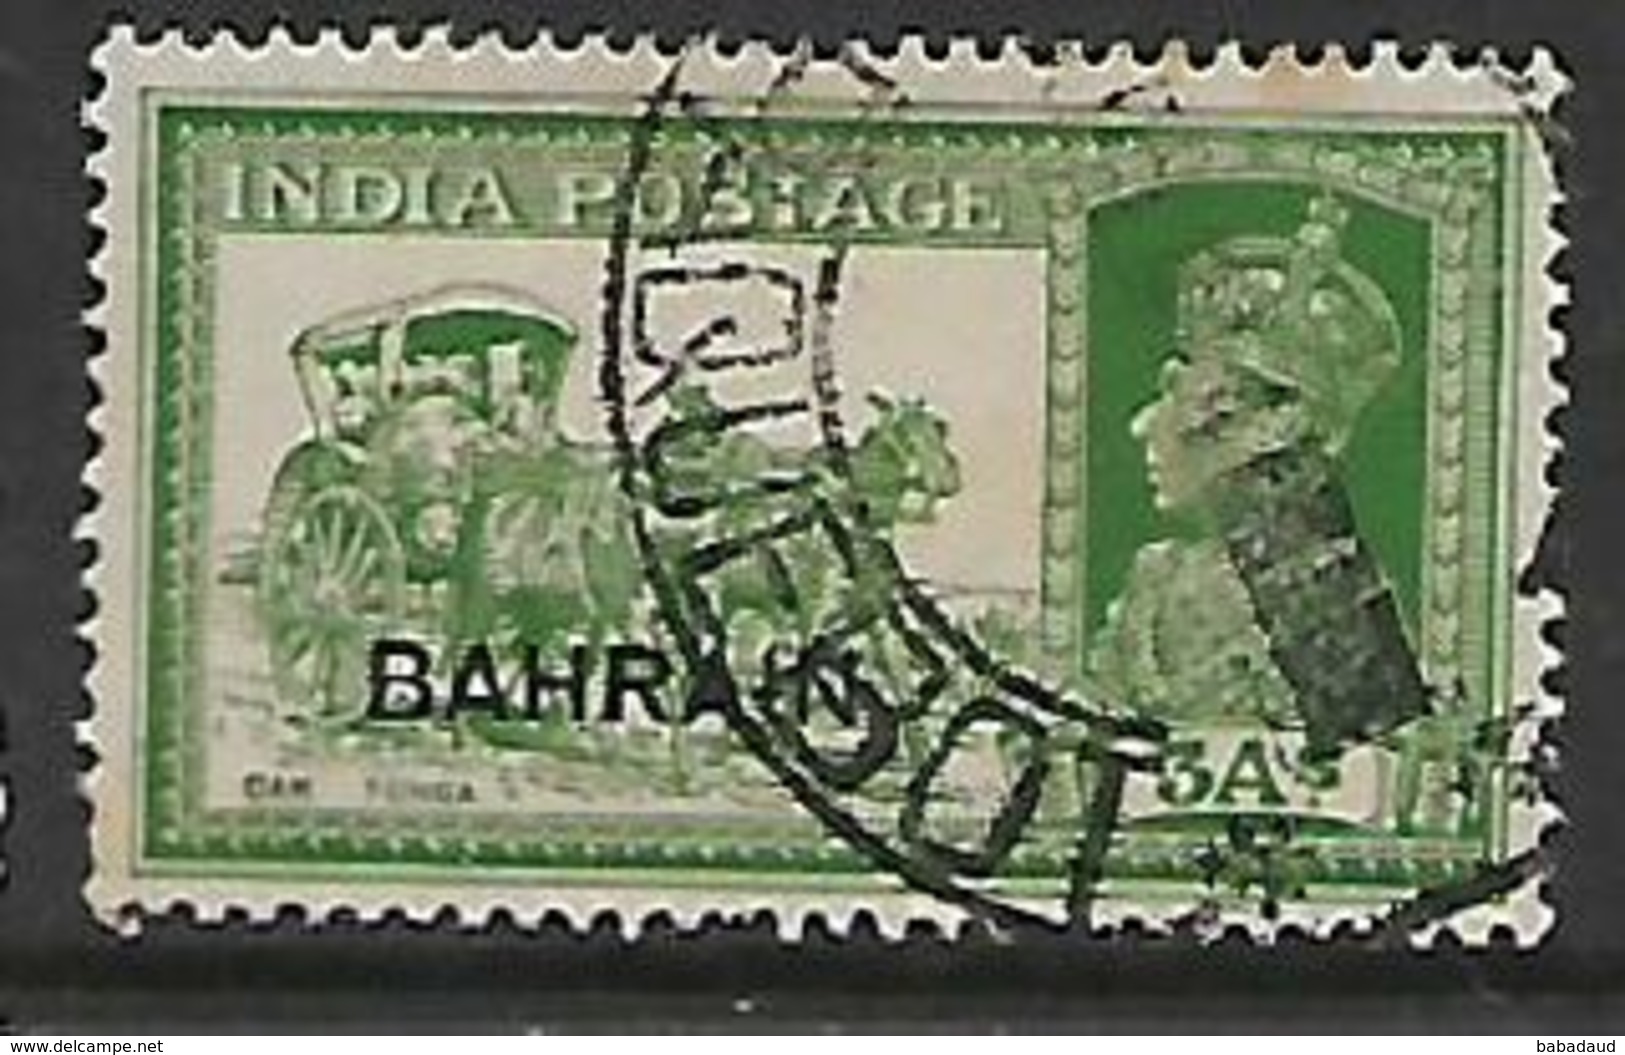 Bahran,, Overprinted On India, George VI, 3 Anna, Bullock Cart,  Used (paquebot C.d.s.) - Bahrain (...-1965)